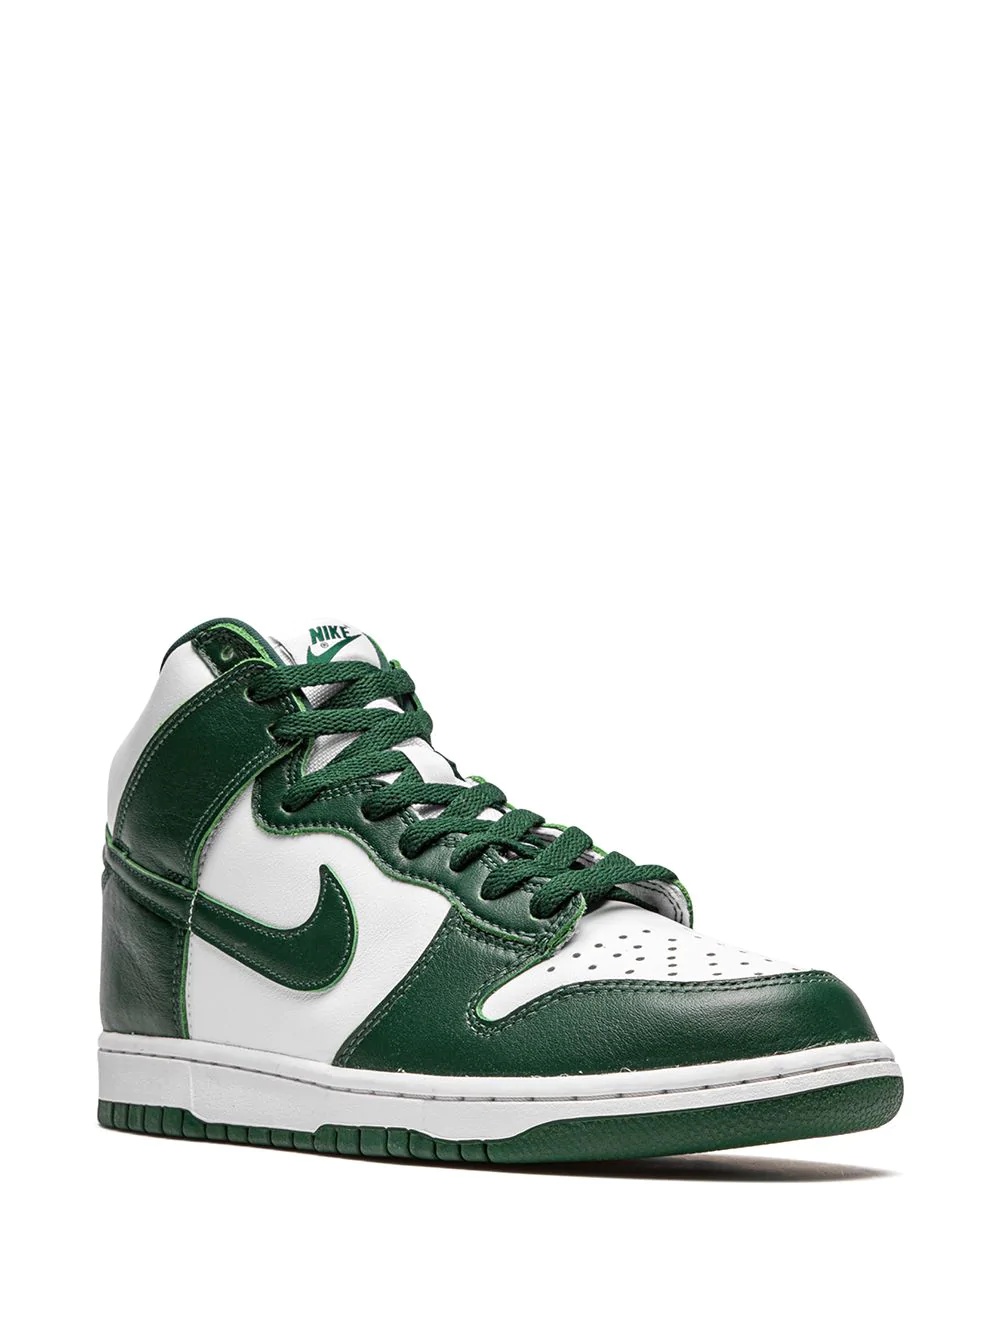 Dunk High SP "Spartan Green" sneakers - 2